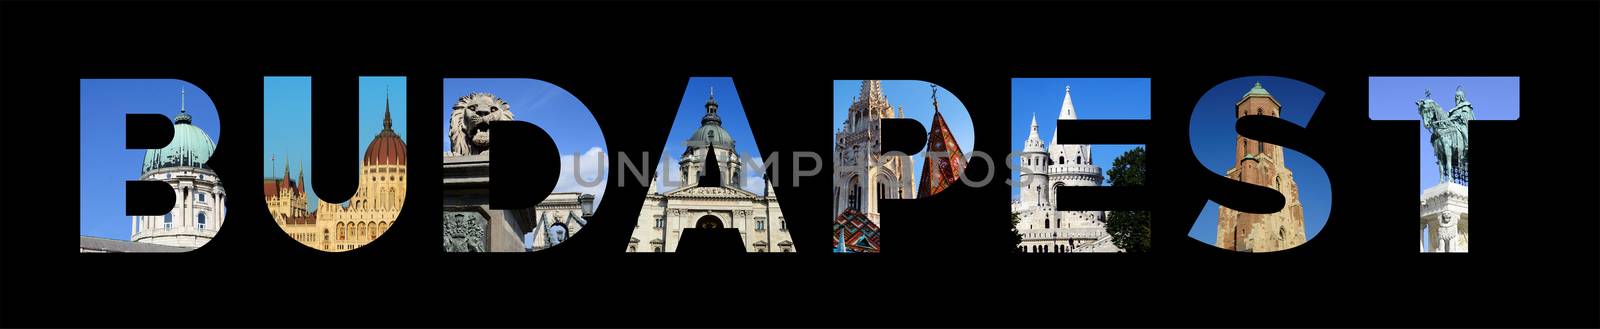 budapest city hungary landmarks images inside text